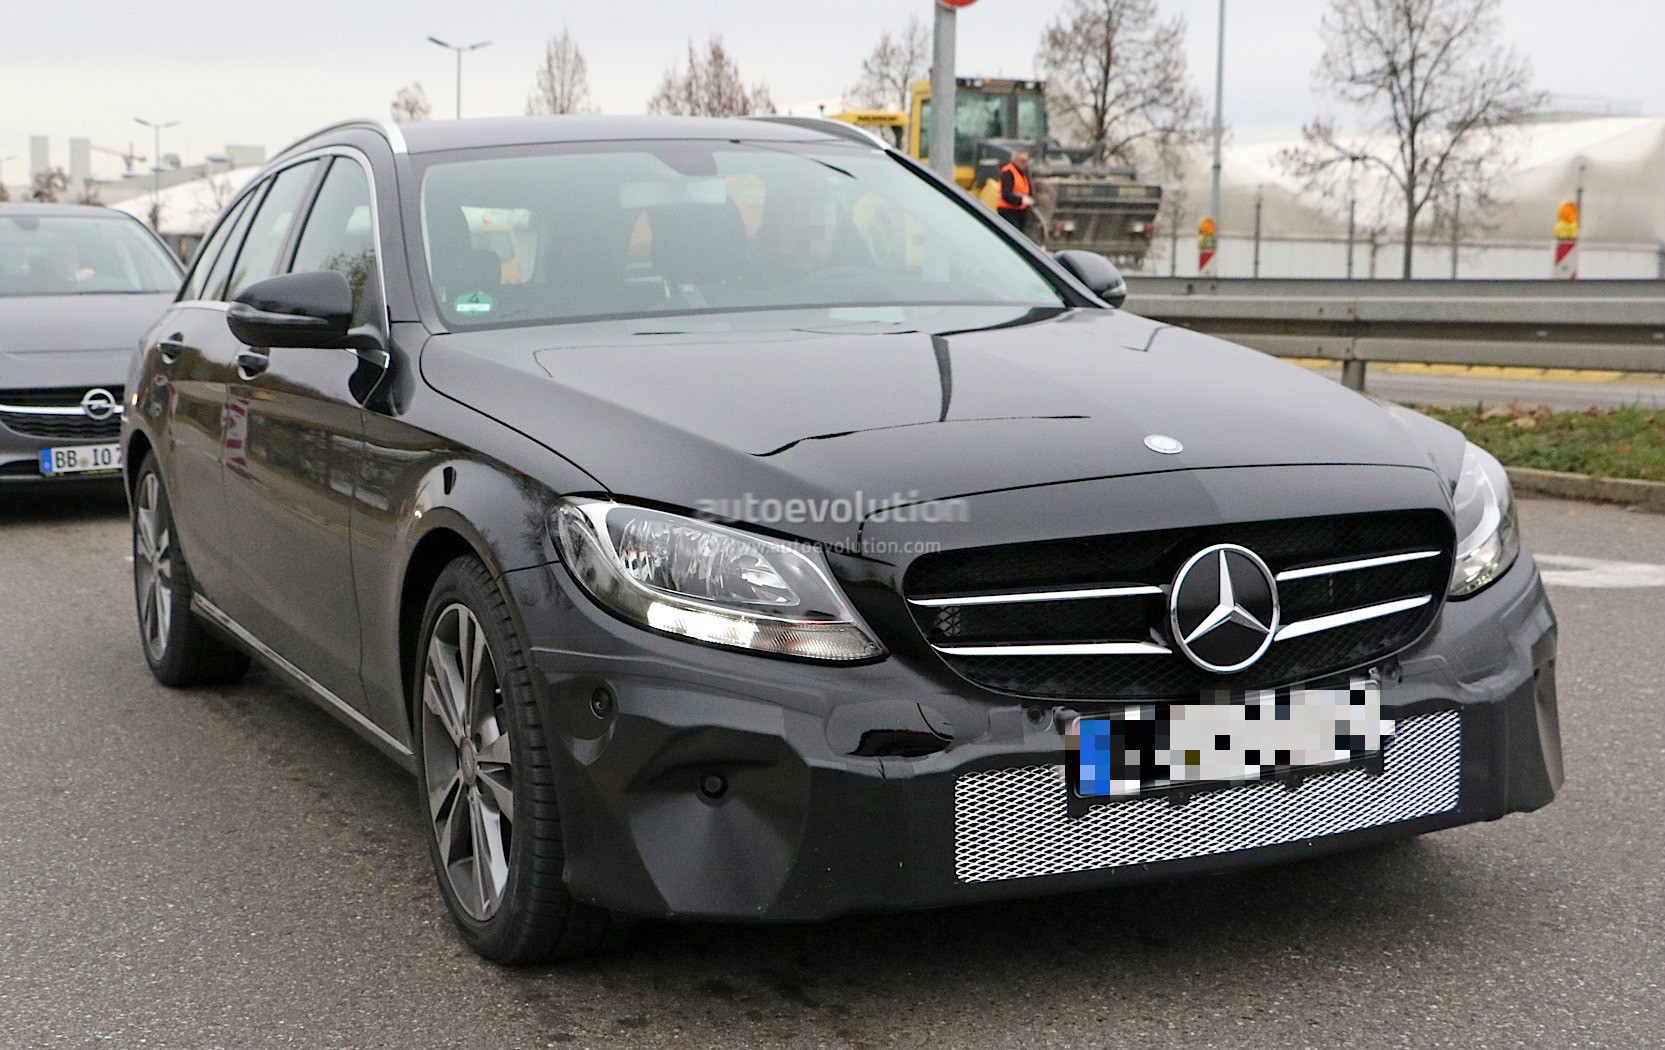 Mercedes-Benz C-Class: News, Pictures & Videos.